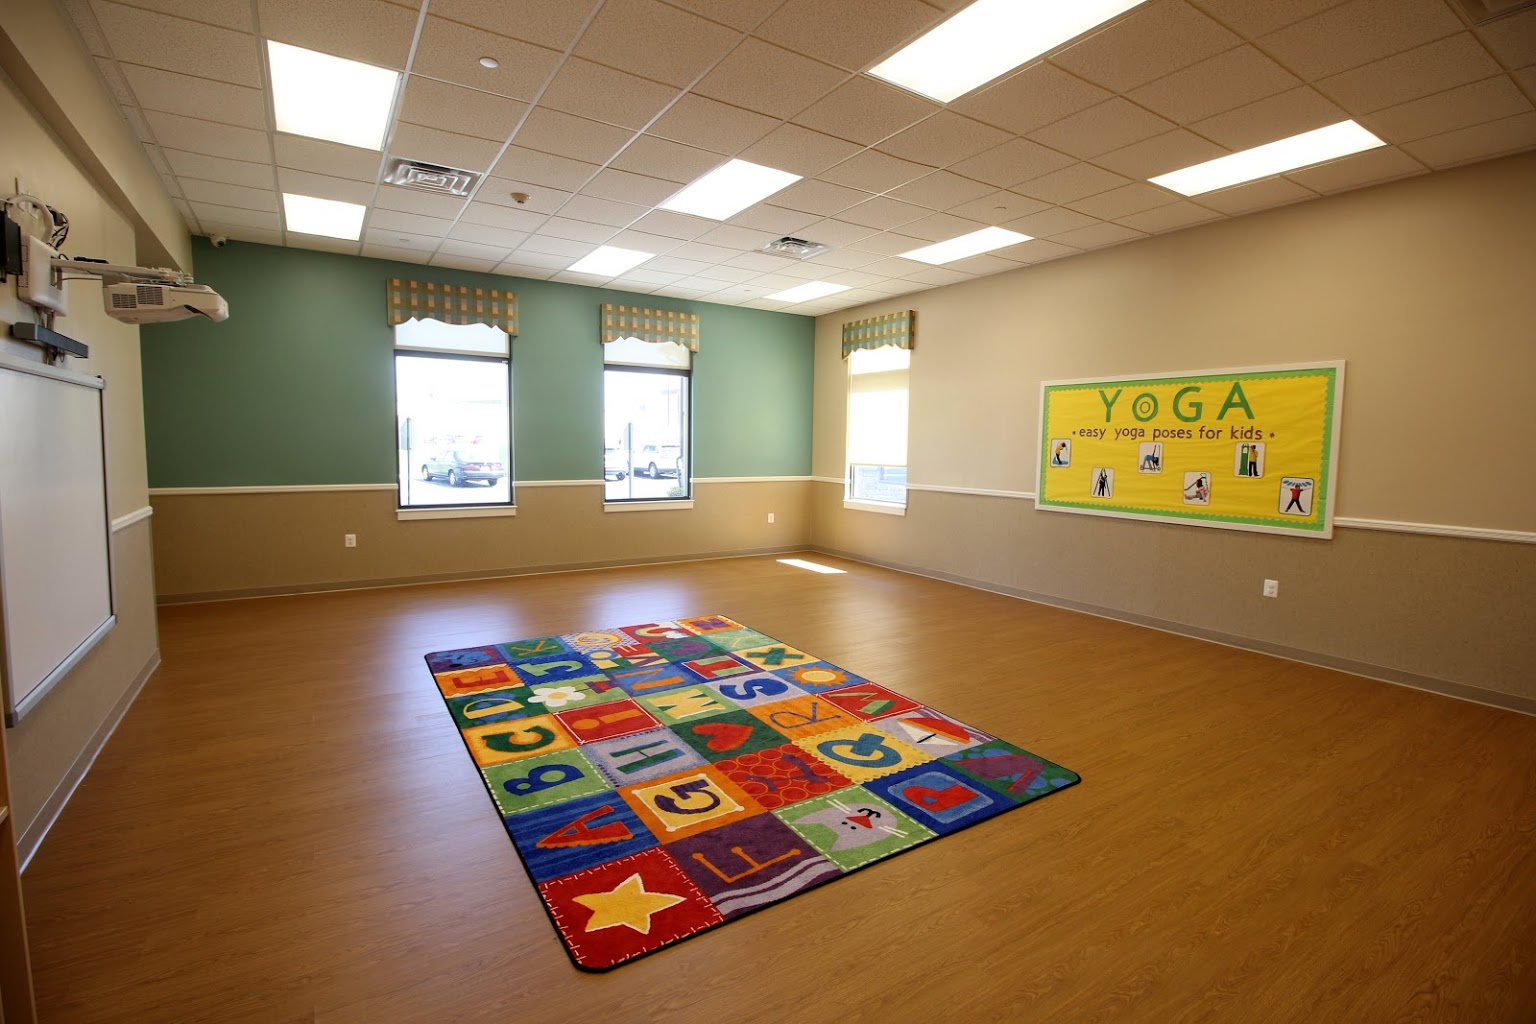 Lightbridge Academy Day Care Center in Garnet Valley, PA multiplay room